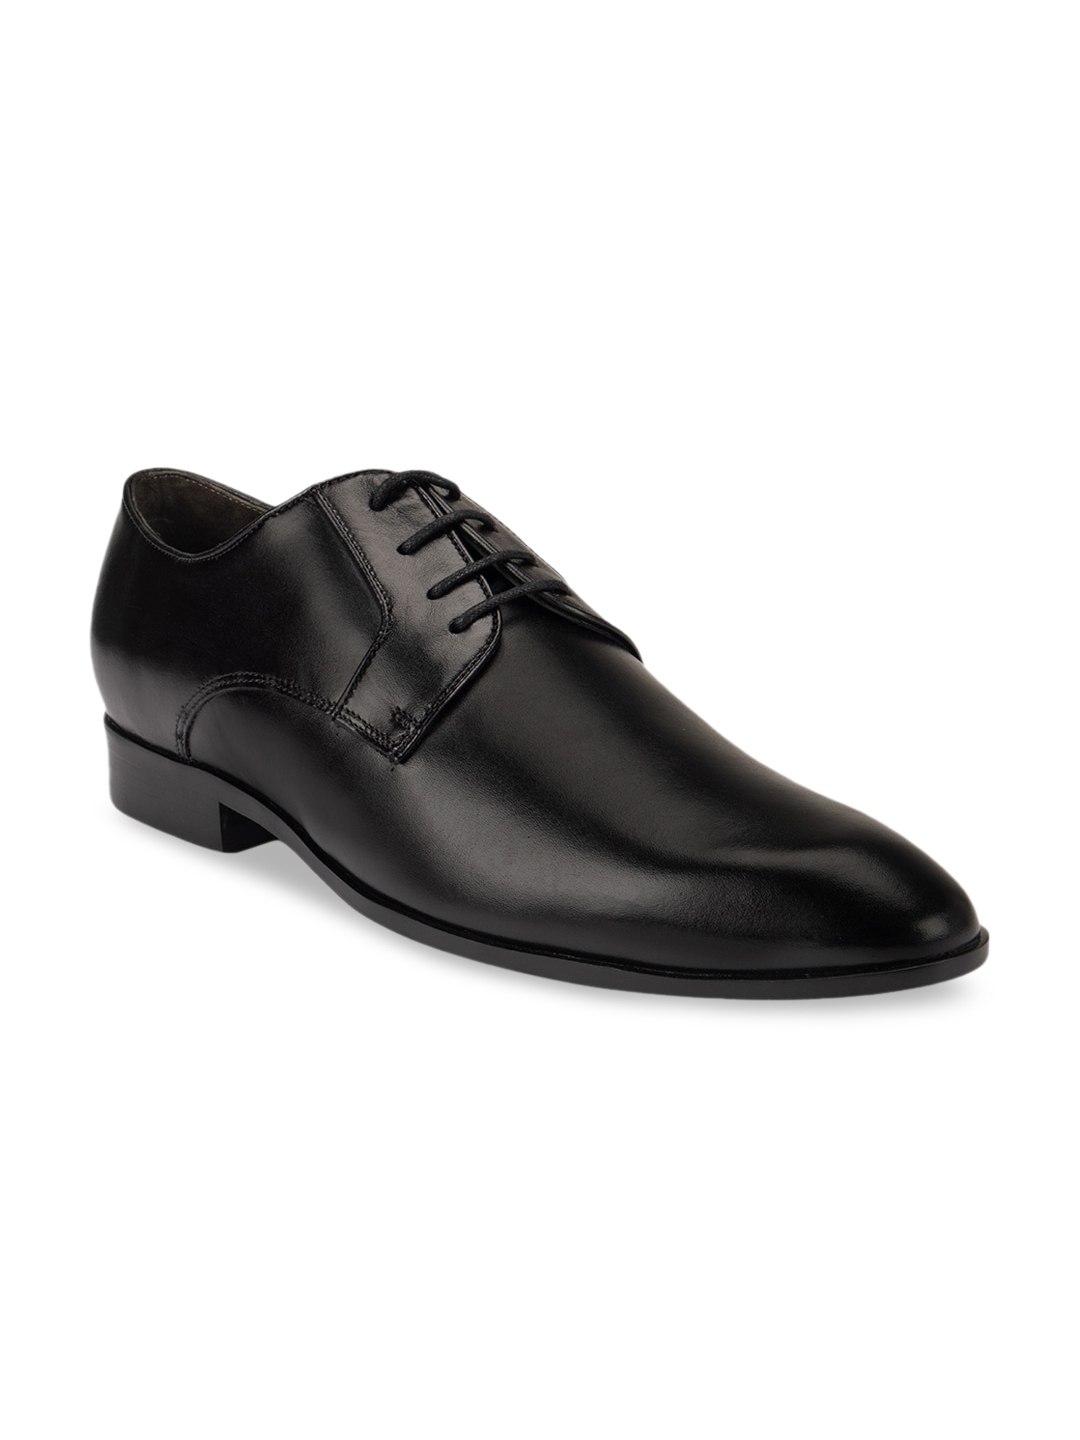 Buy ROSSO BRUNELLO Men Black Leather Formal Shoes - Formal Shoes for ...